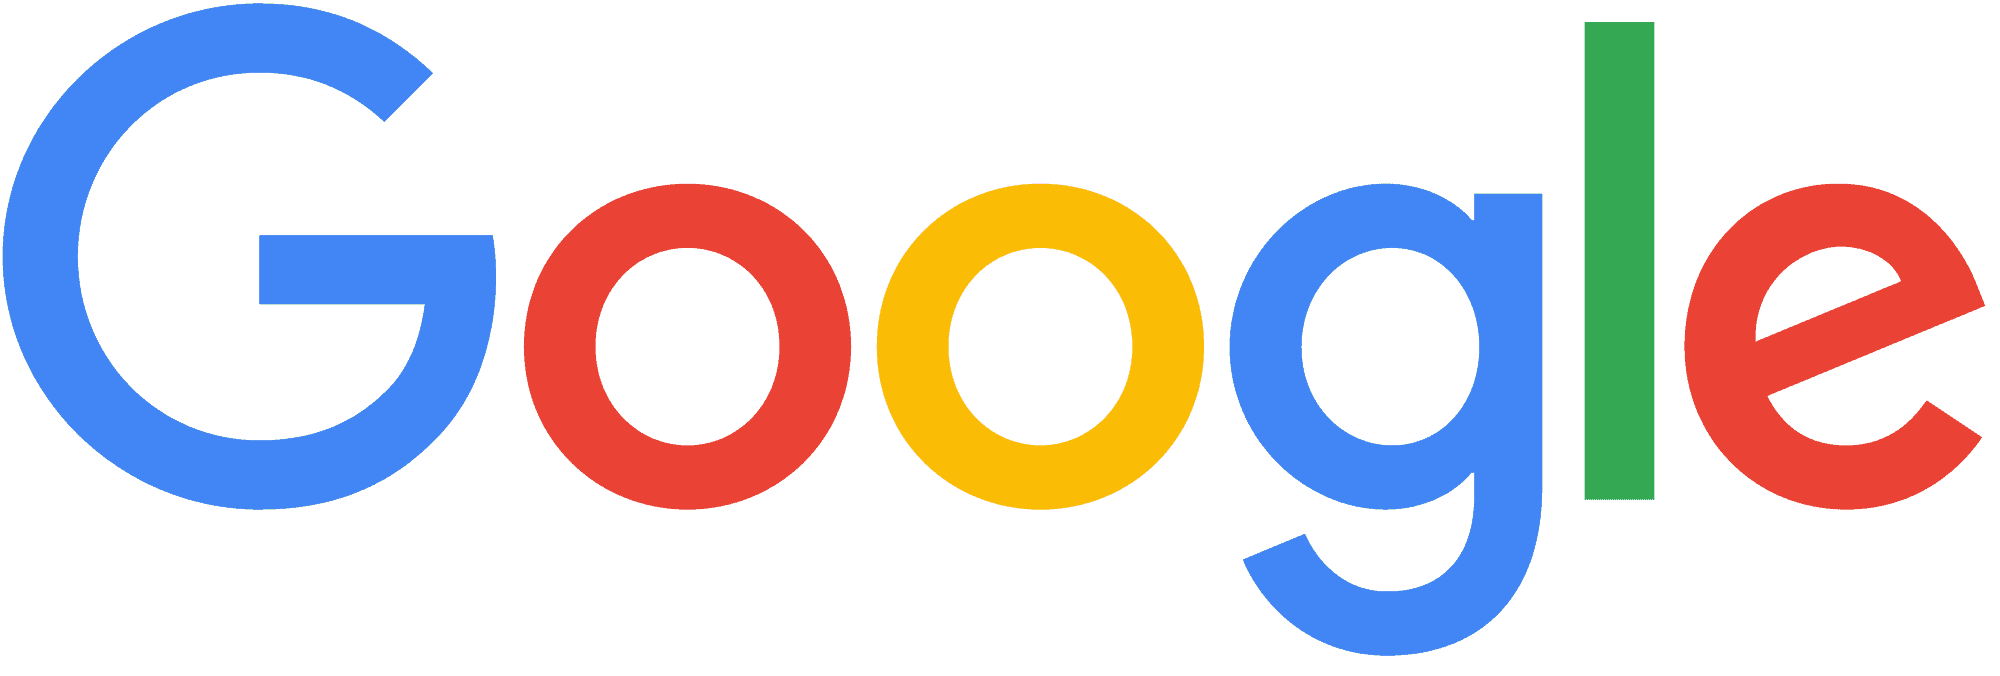 Google logo color